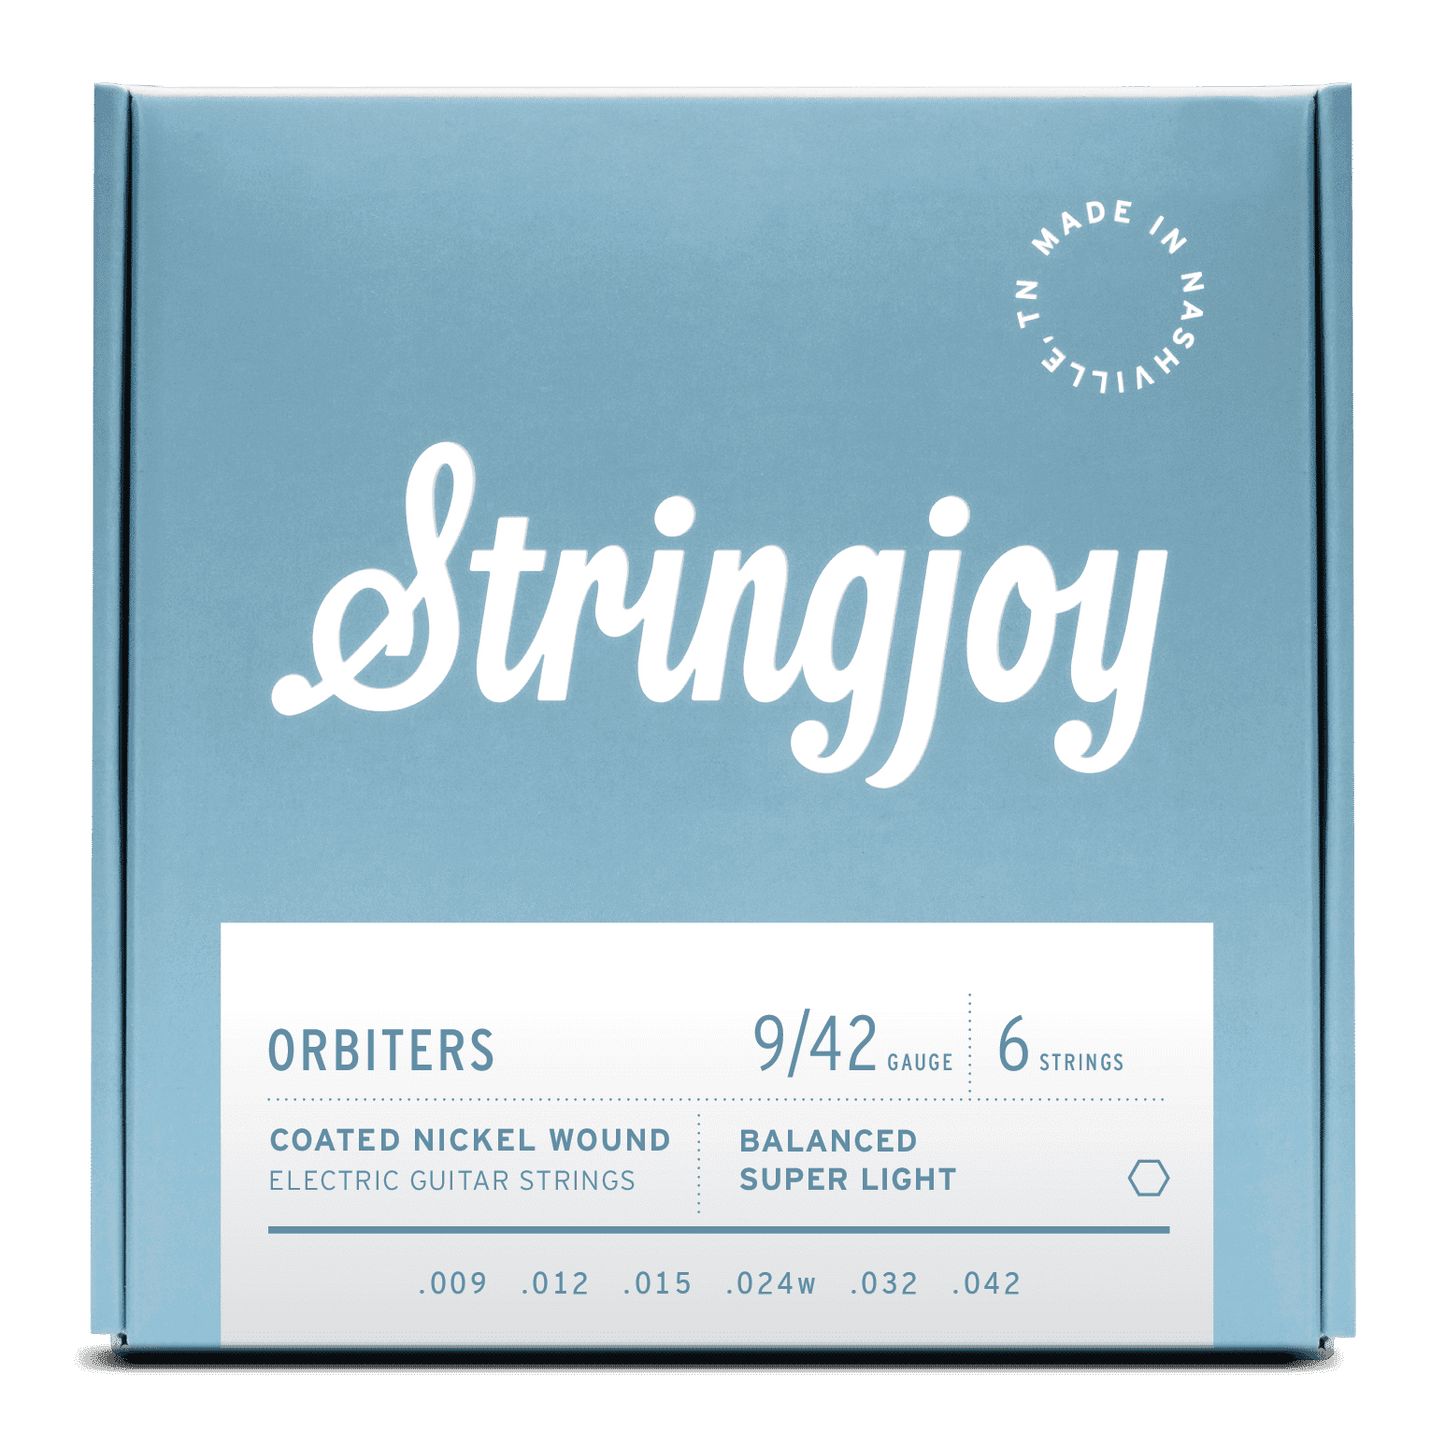 Stringjoy Orbiters Coated Balanced Super Light Gauge Electric Guitar Strings